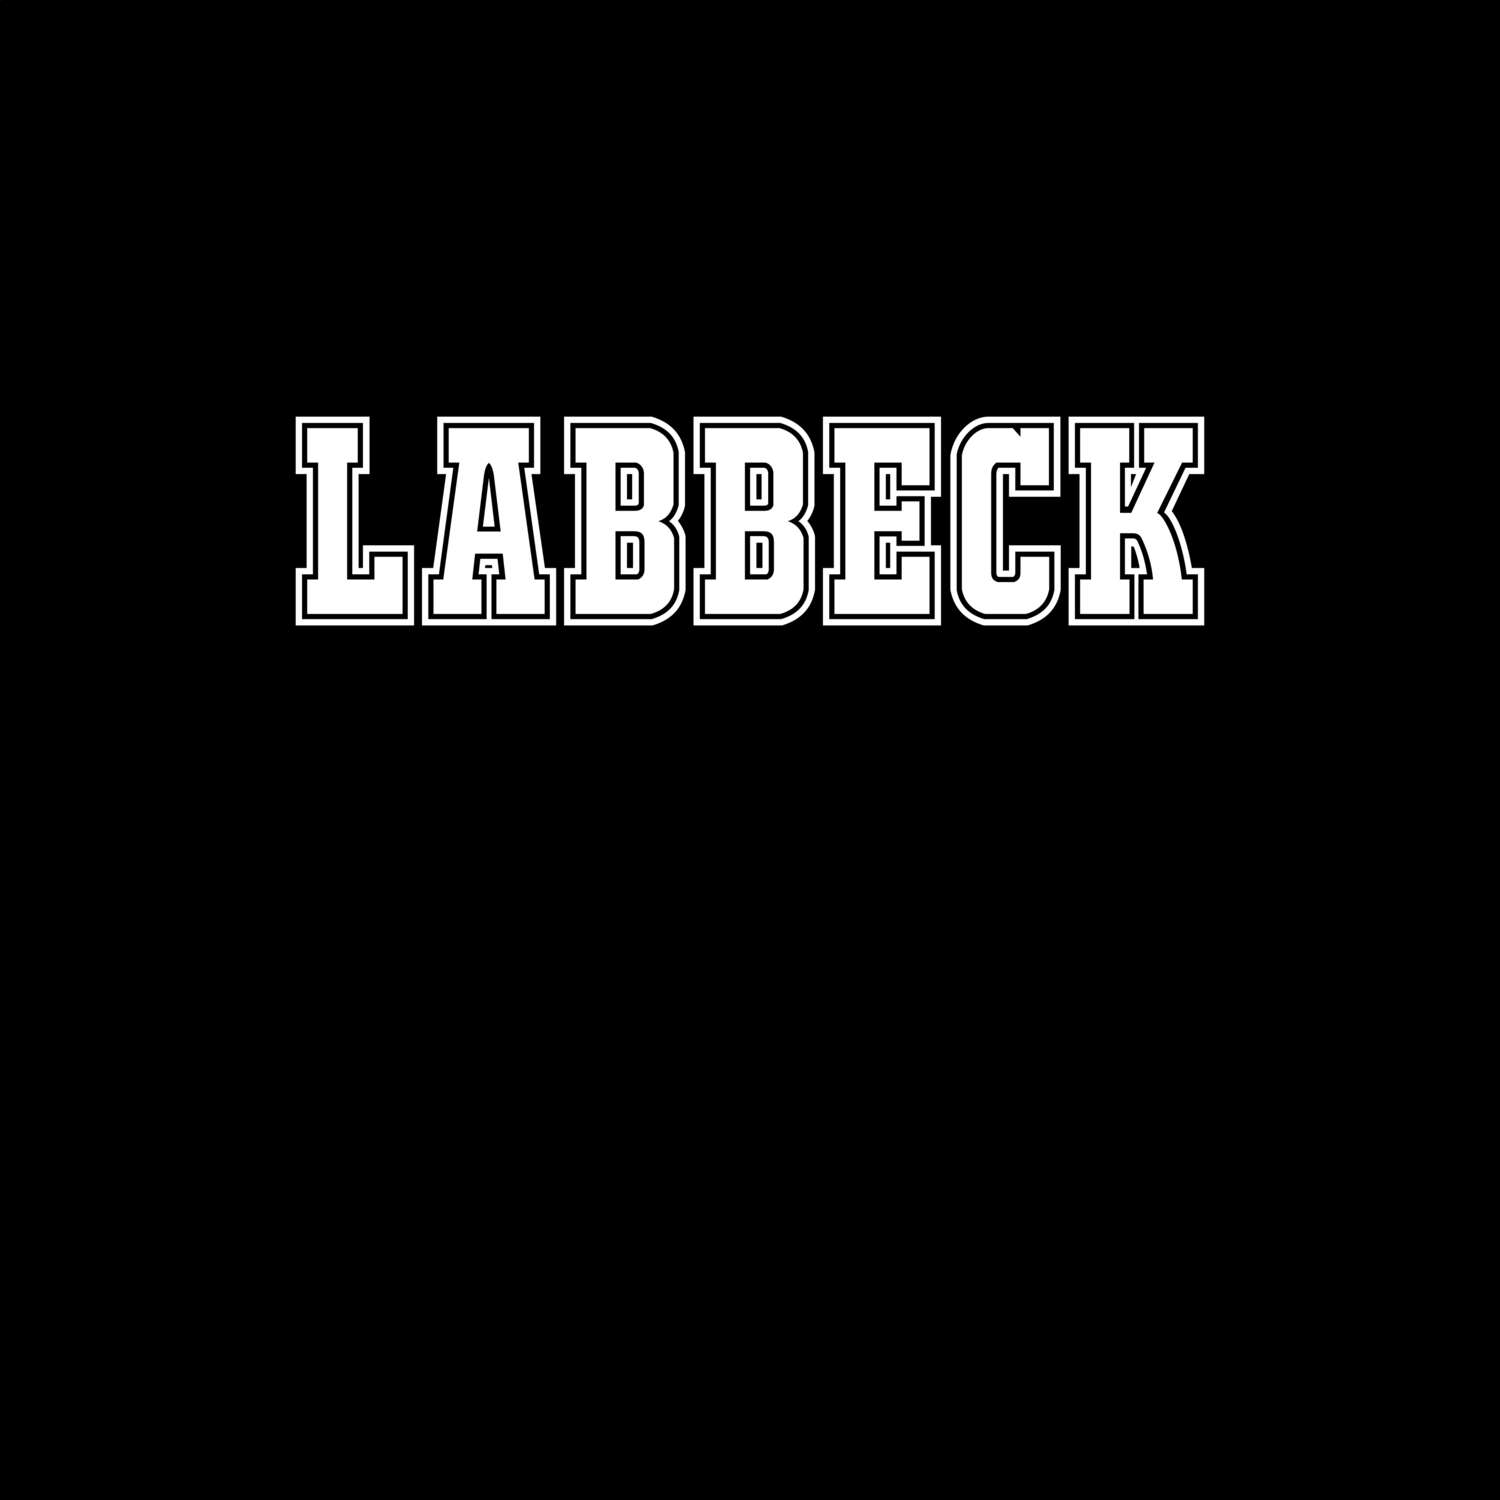 Labbeck T-Shirt »Classic«